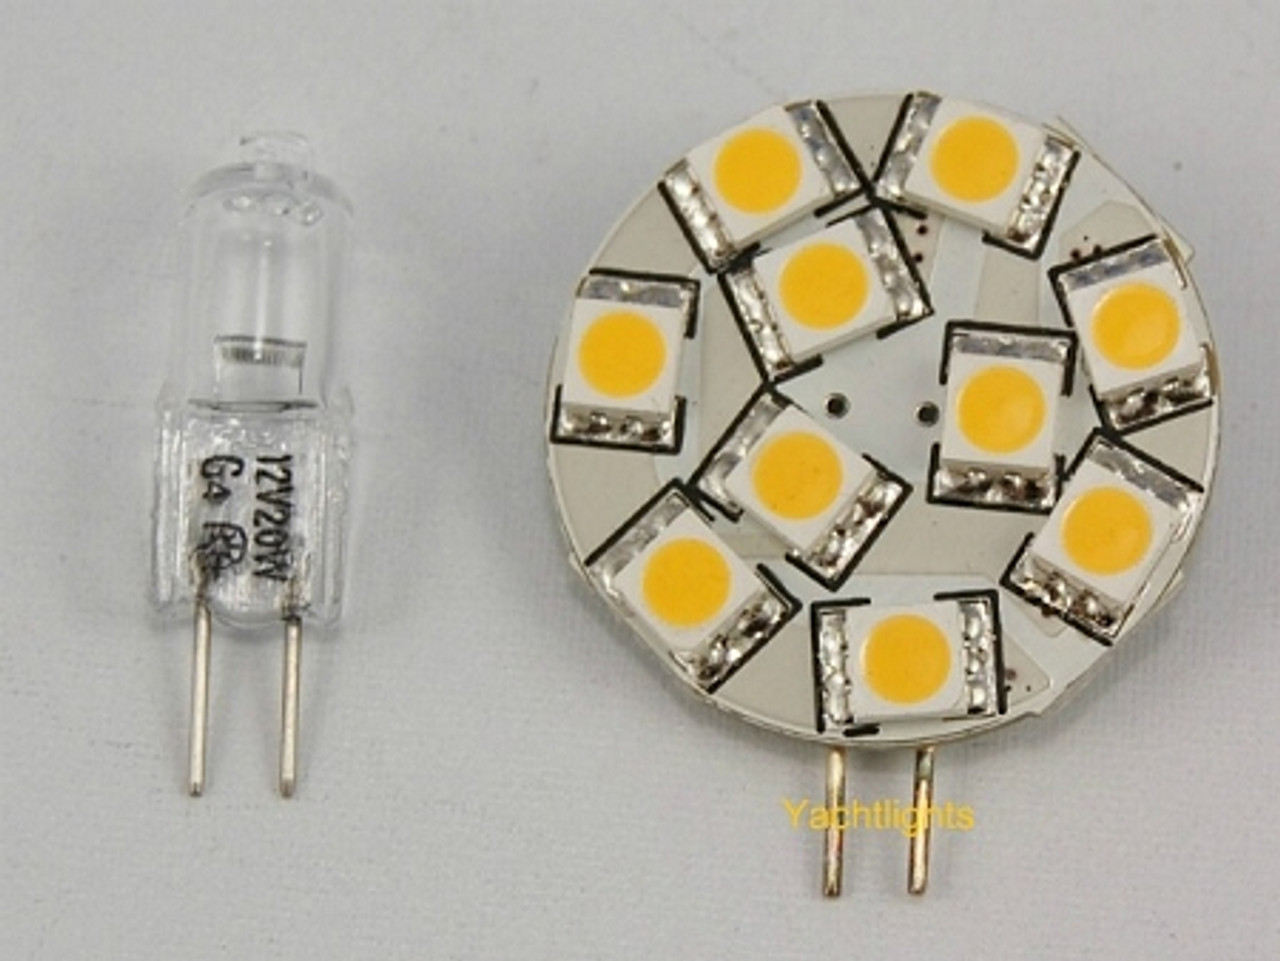 9-LED bulb G4 rear connection Ø 28mm 12/24V 1,6W 2700K Warm White